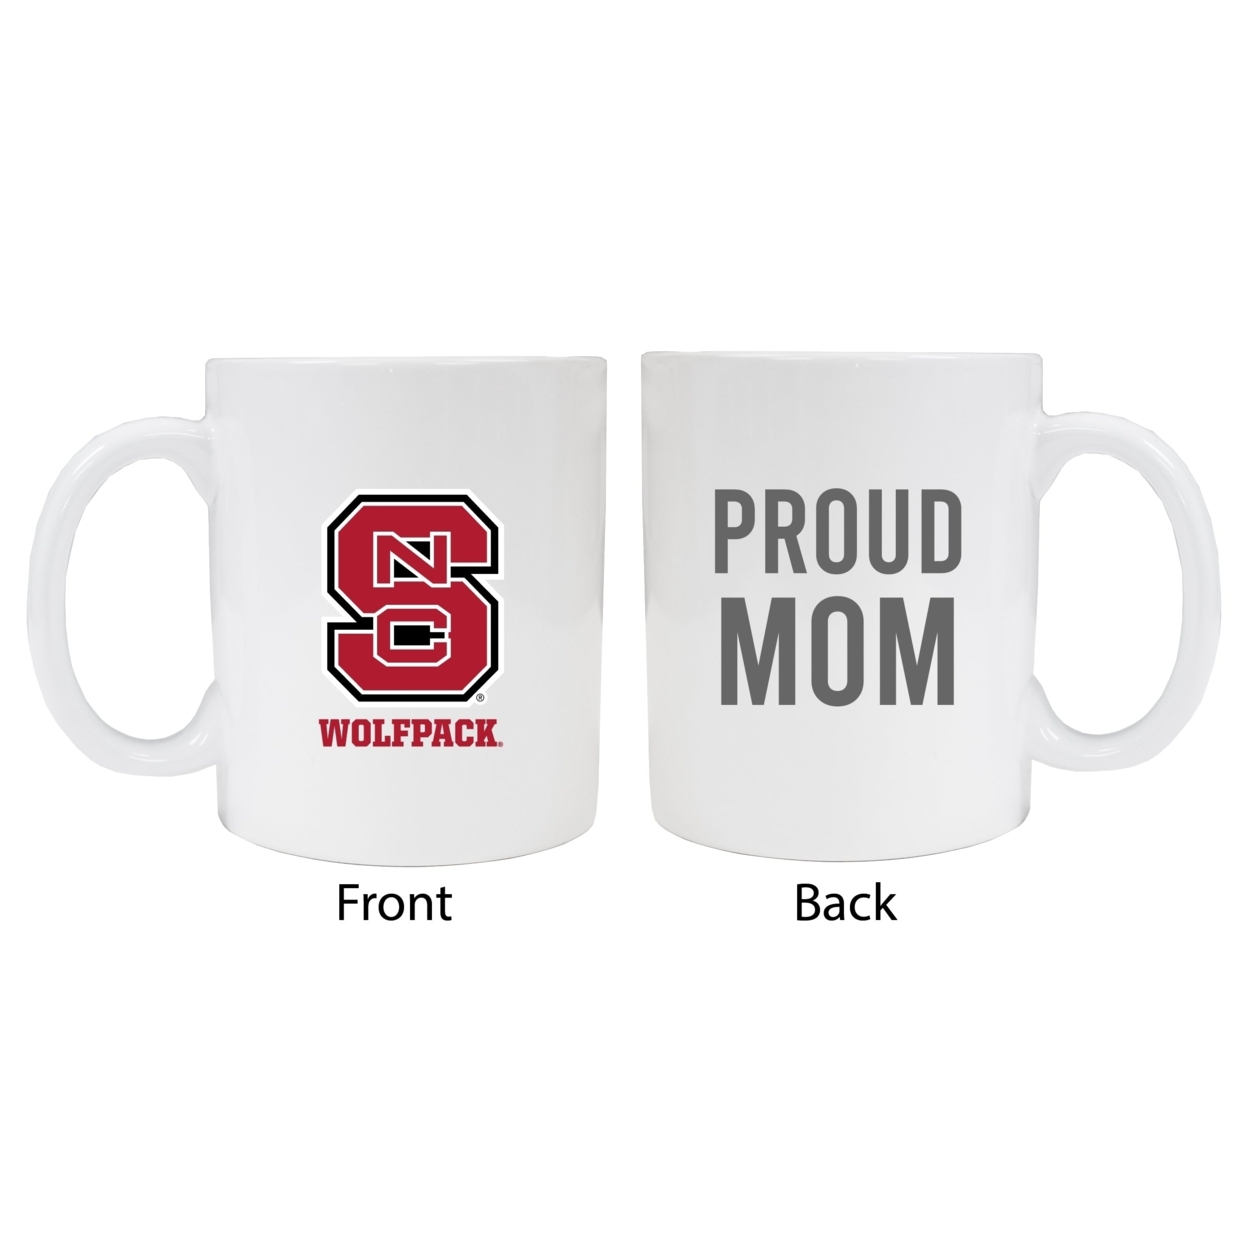 NC State Wolfpack Proud Mom Ceramic Coffee Mug - White (2 Pack)